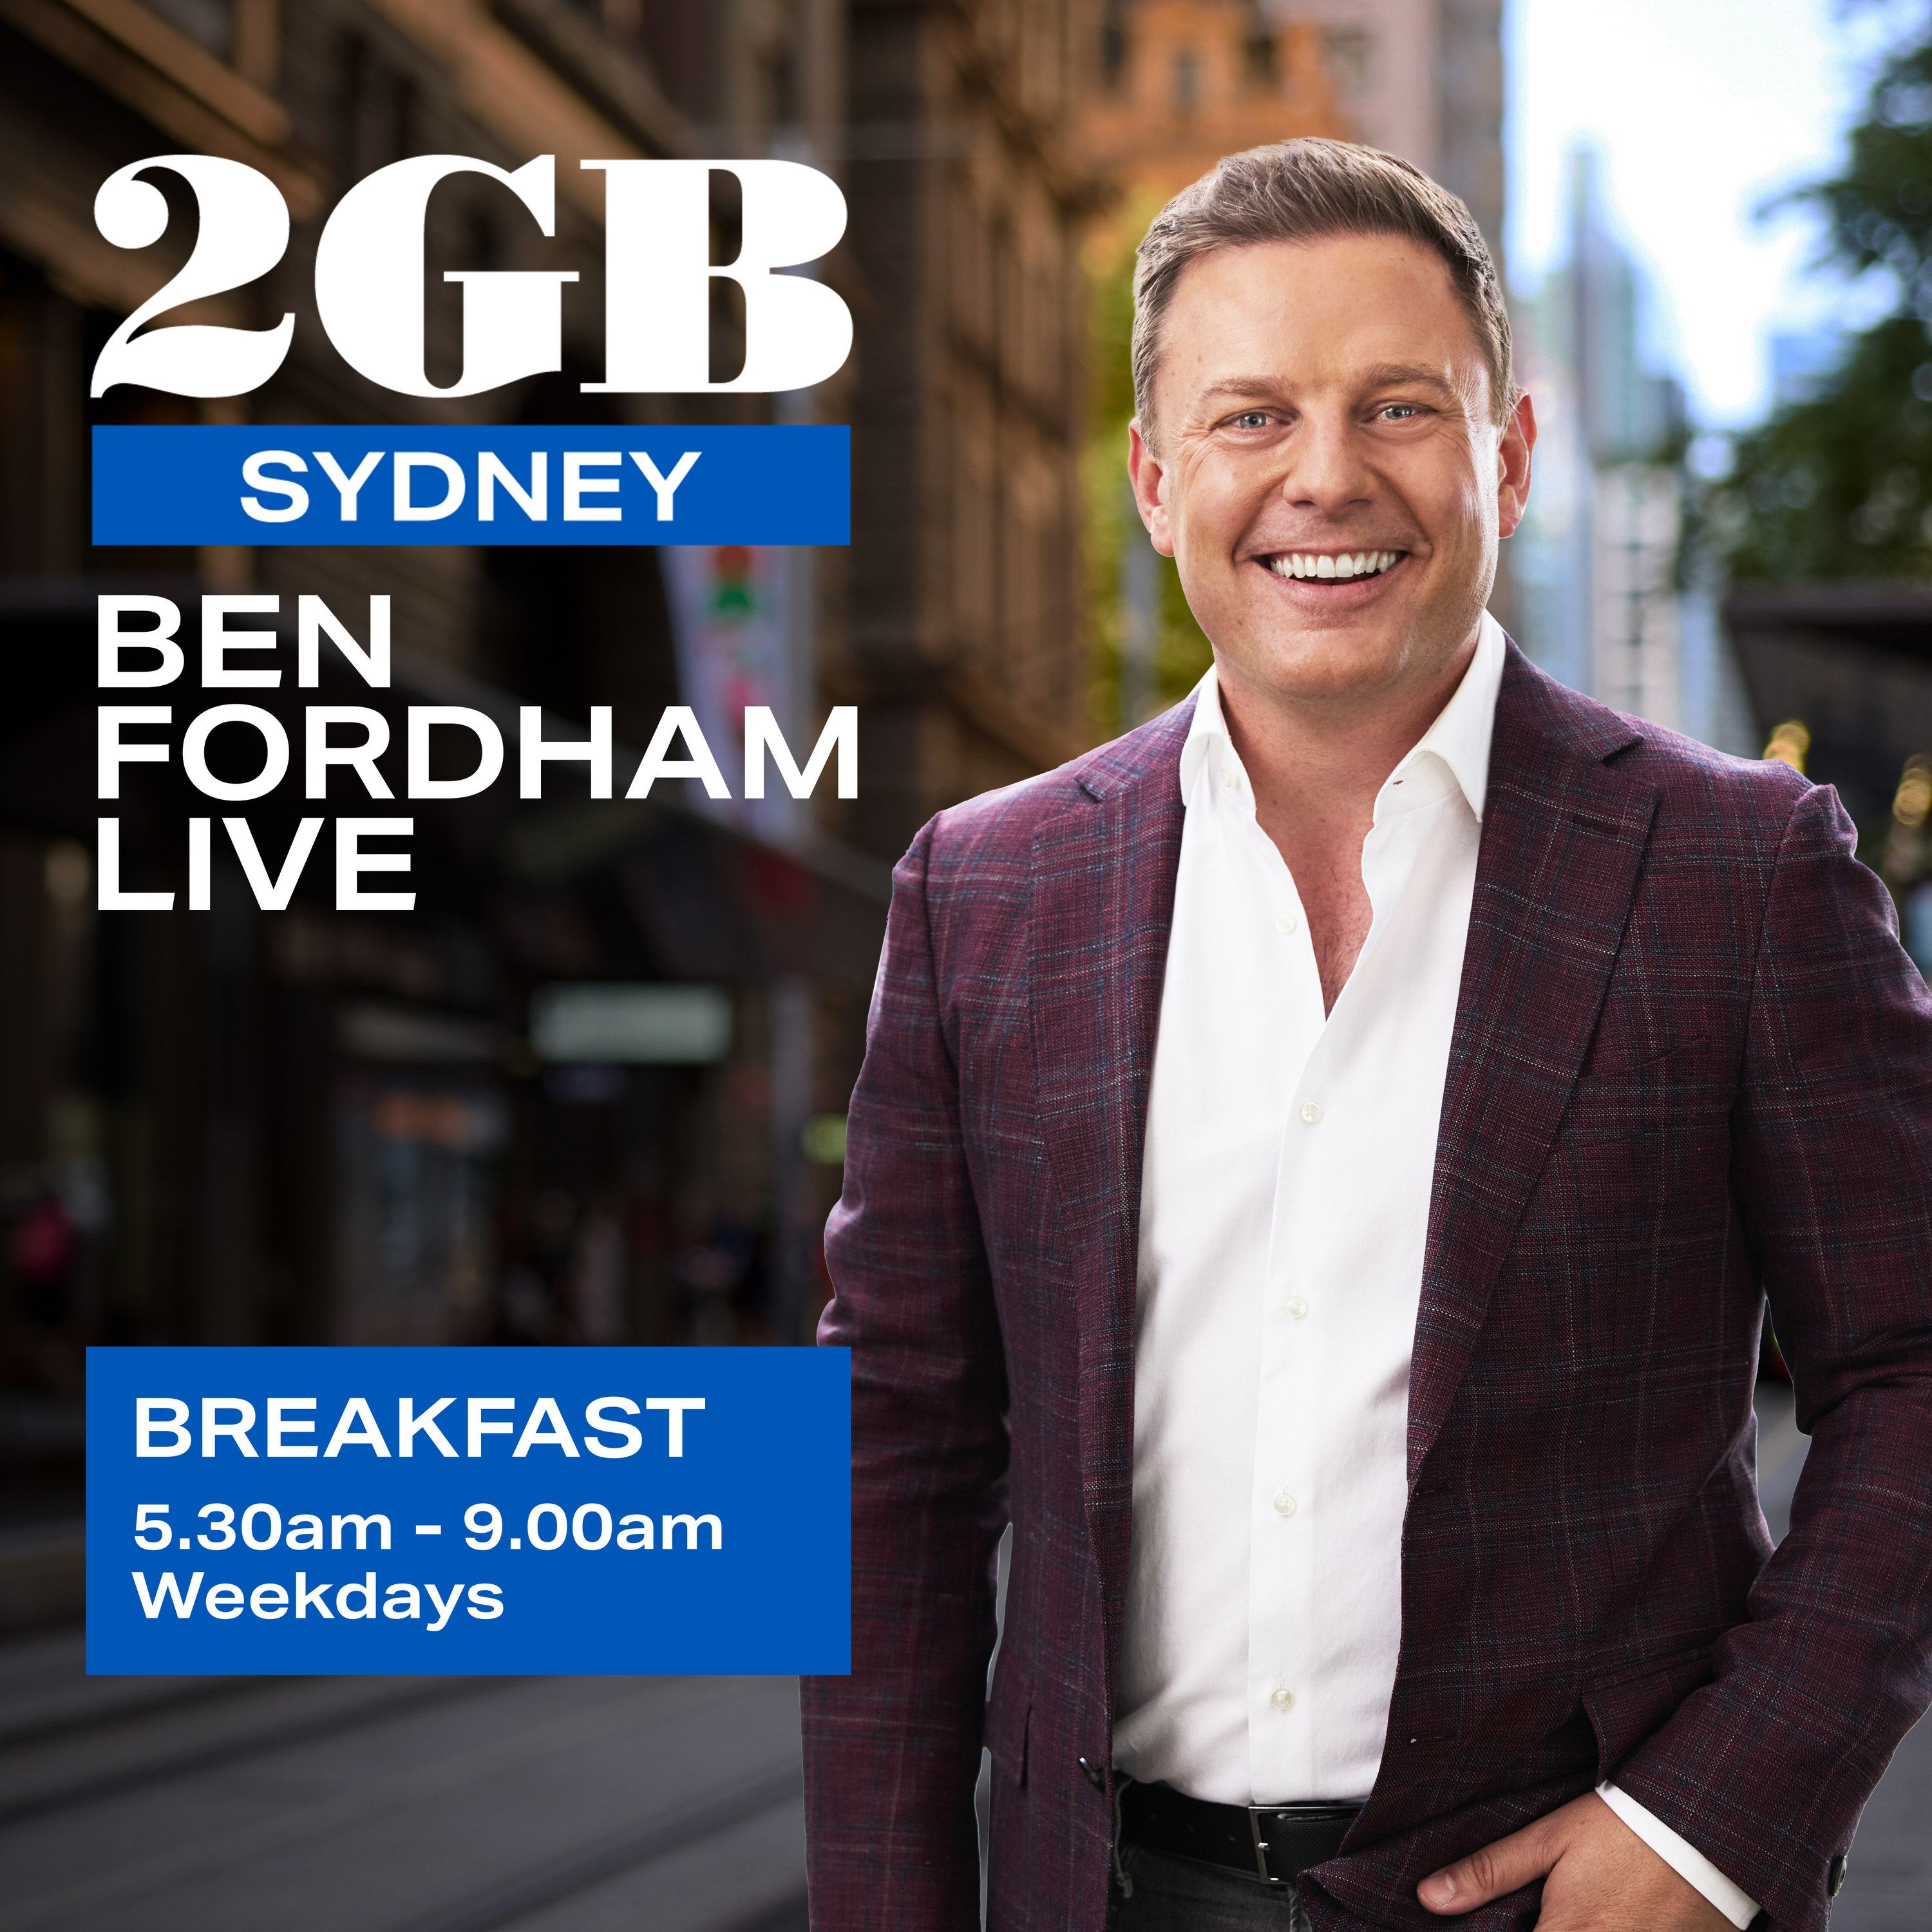 Ben Fordham - Why Did Police Leave Sydney Siege?